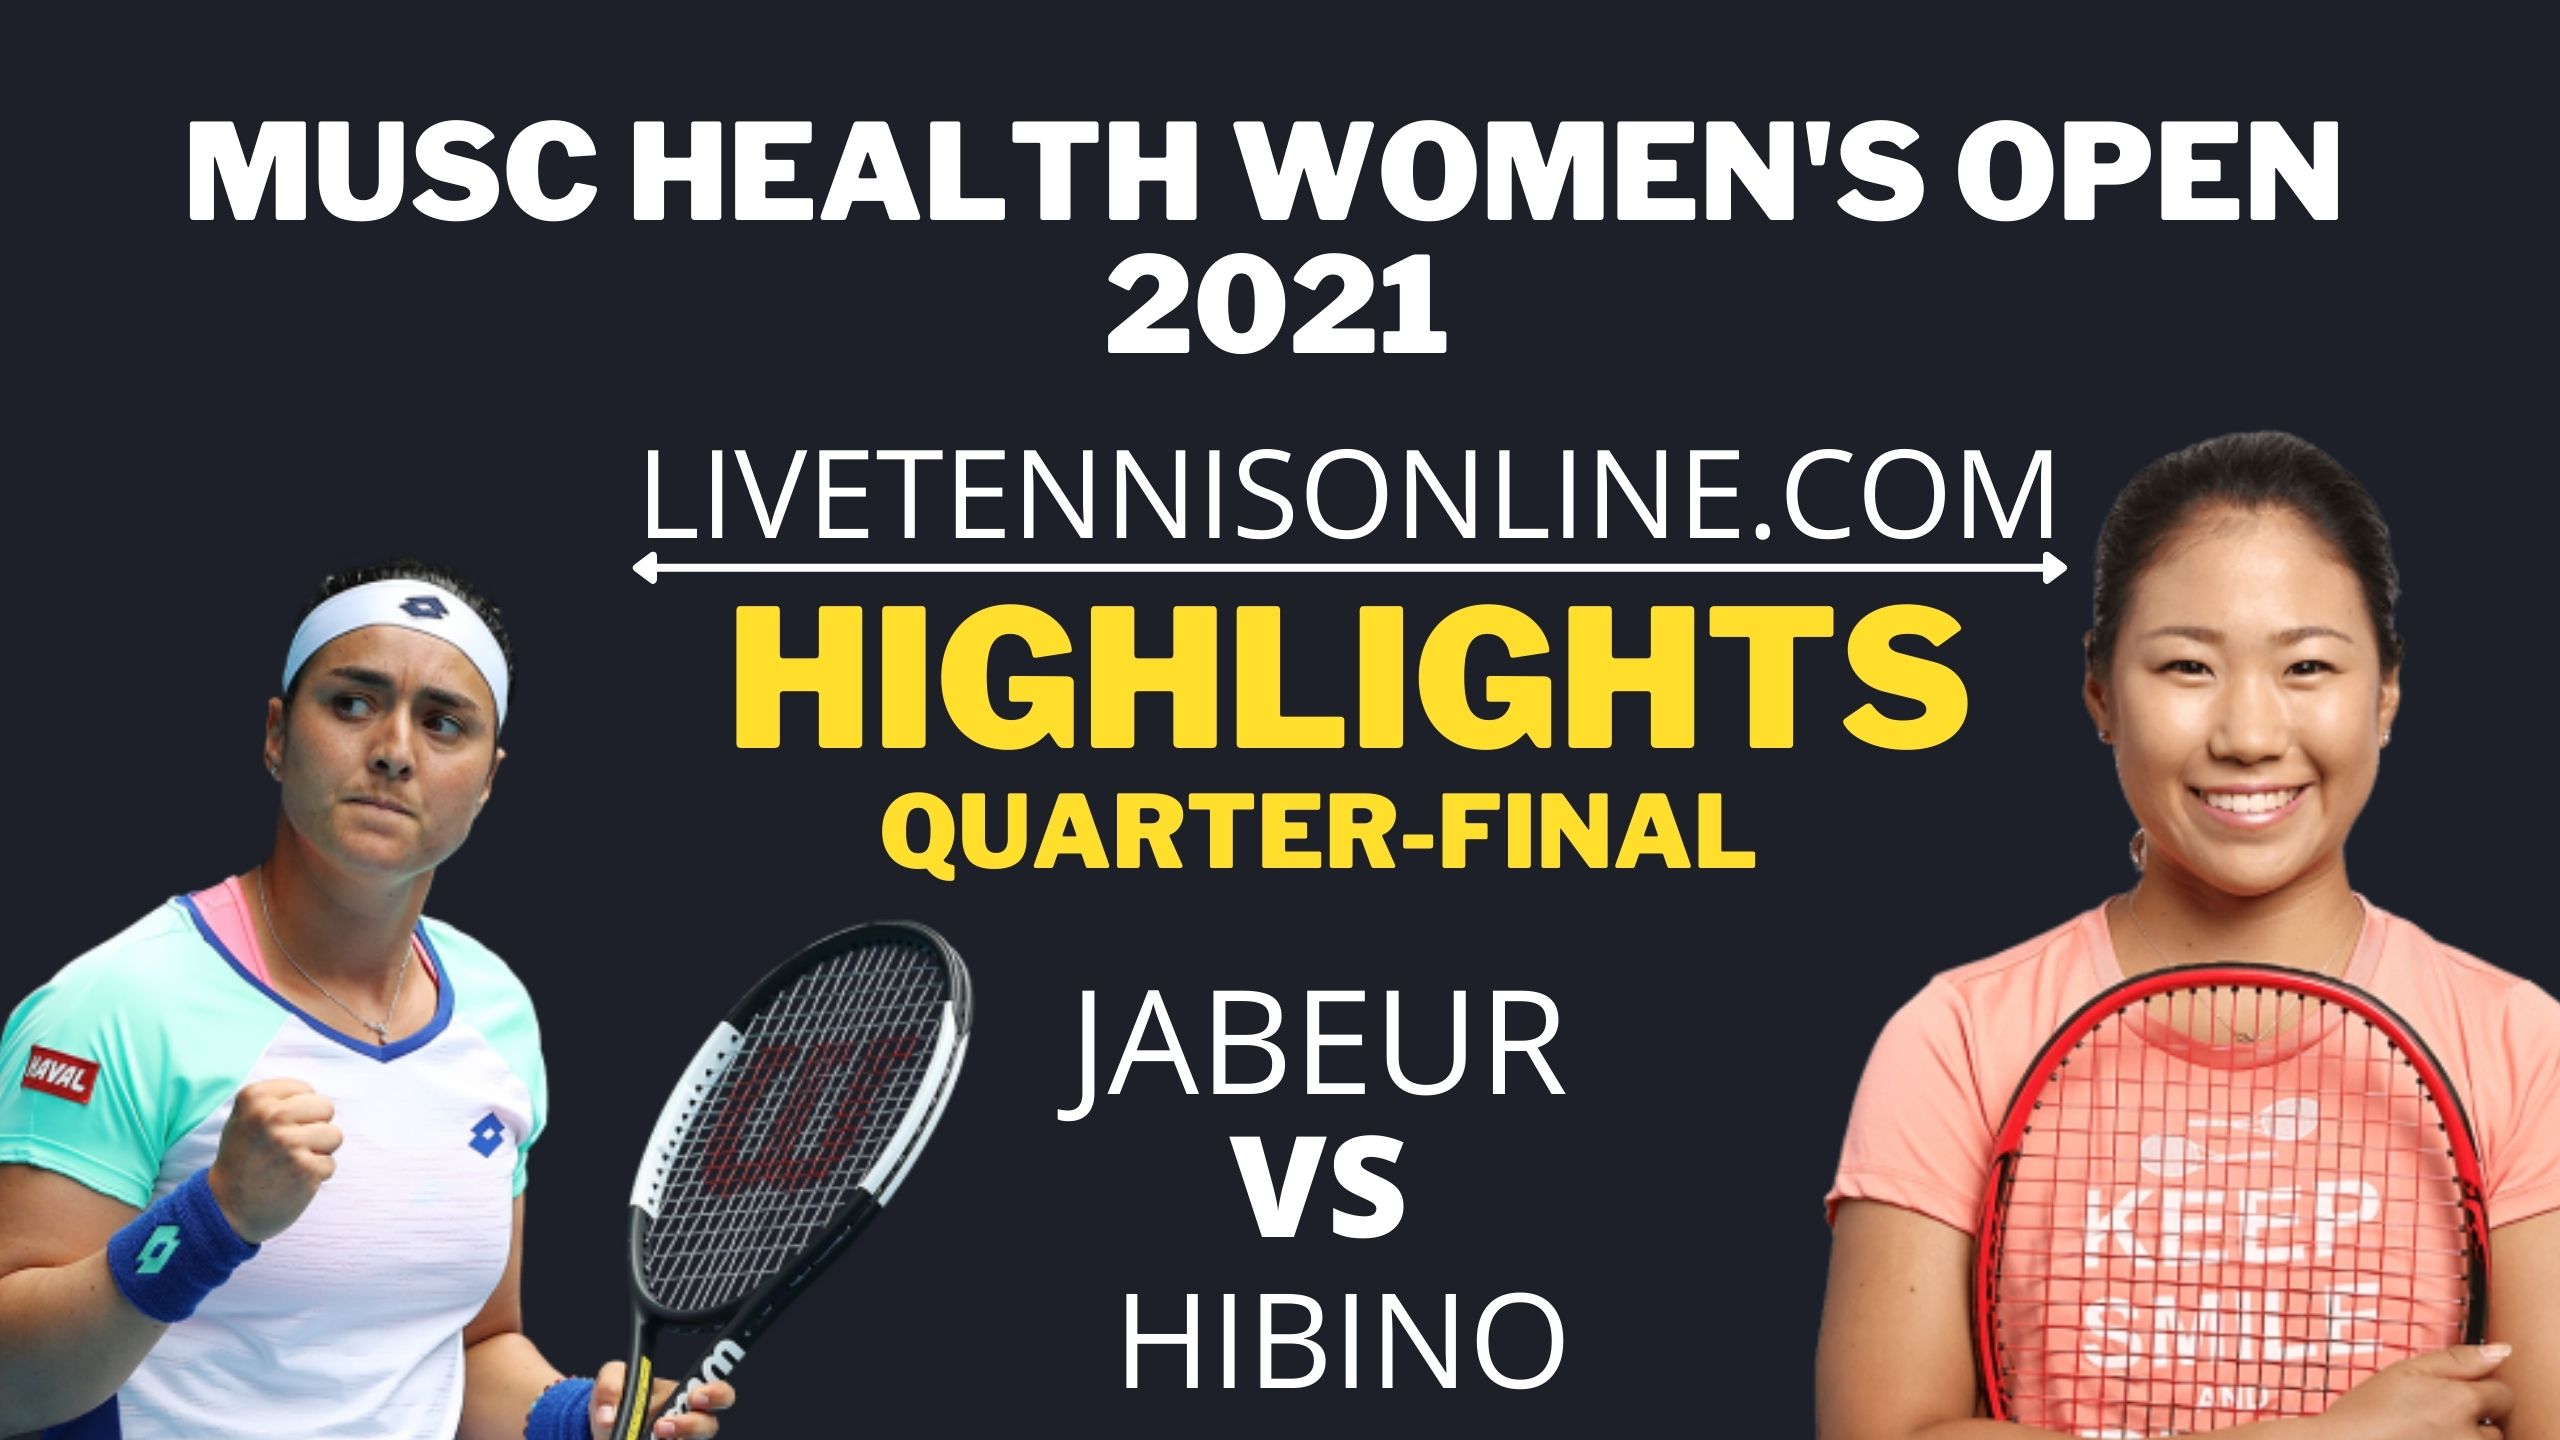 Jabeur Vs Hibino Quarter Final Highlights 2021